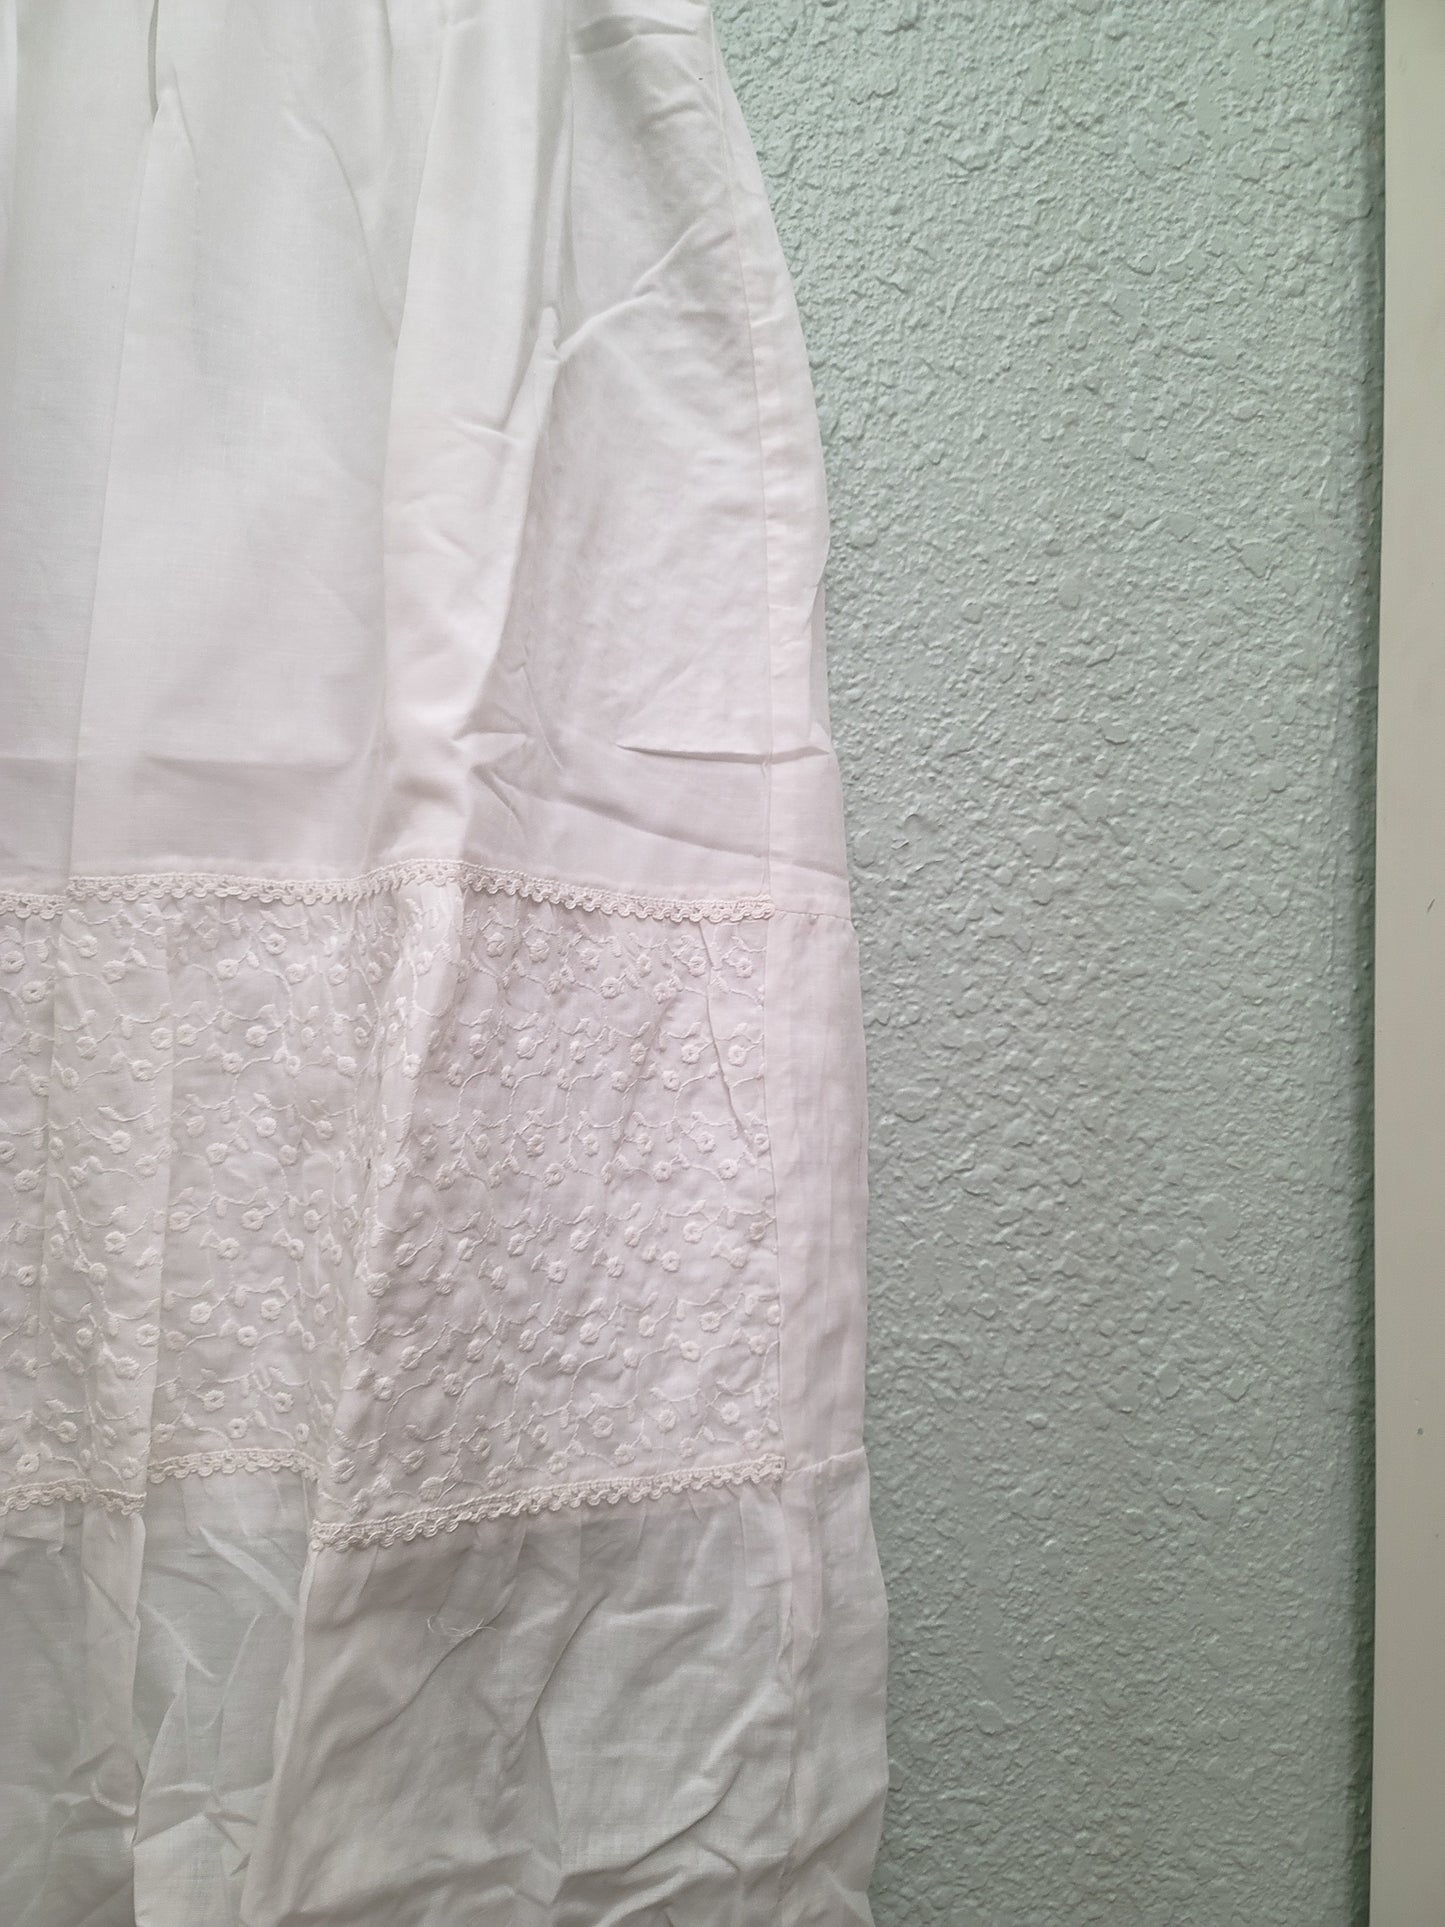 Full-Length Sleeveless White Dress with Stylish Embroidery